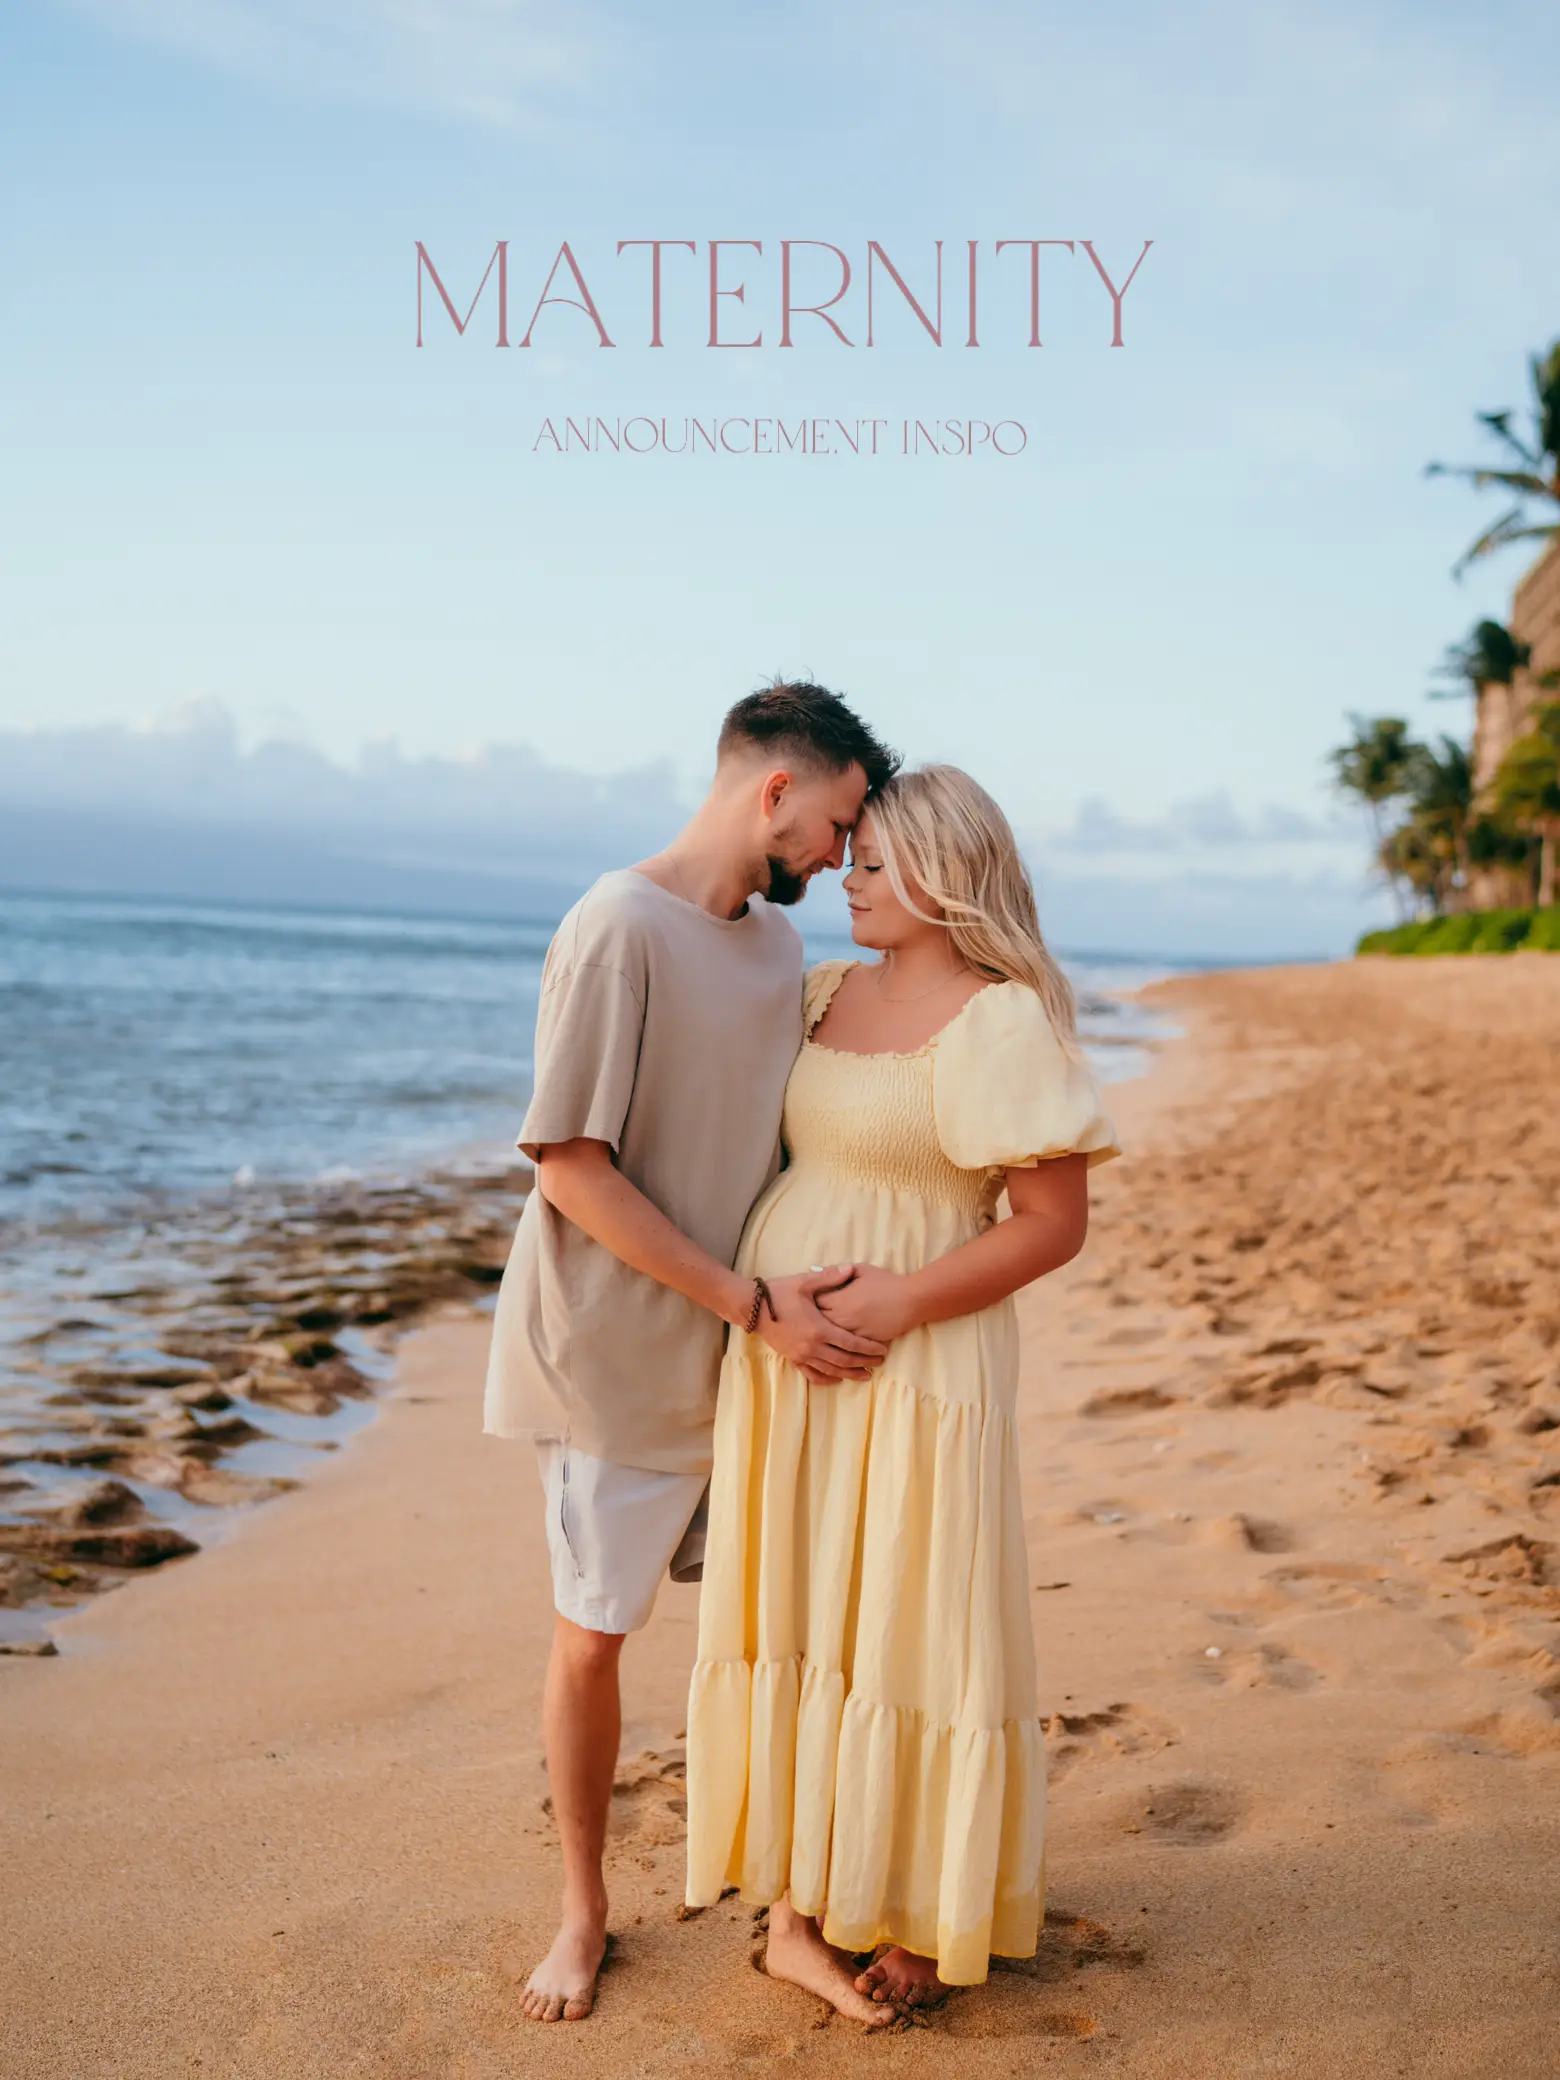 Maternity Announcement inspo's images